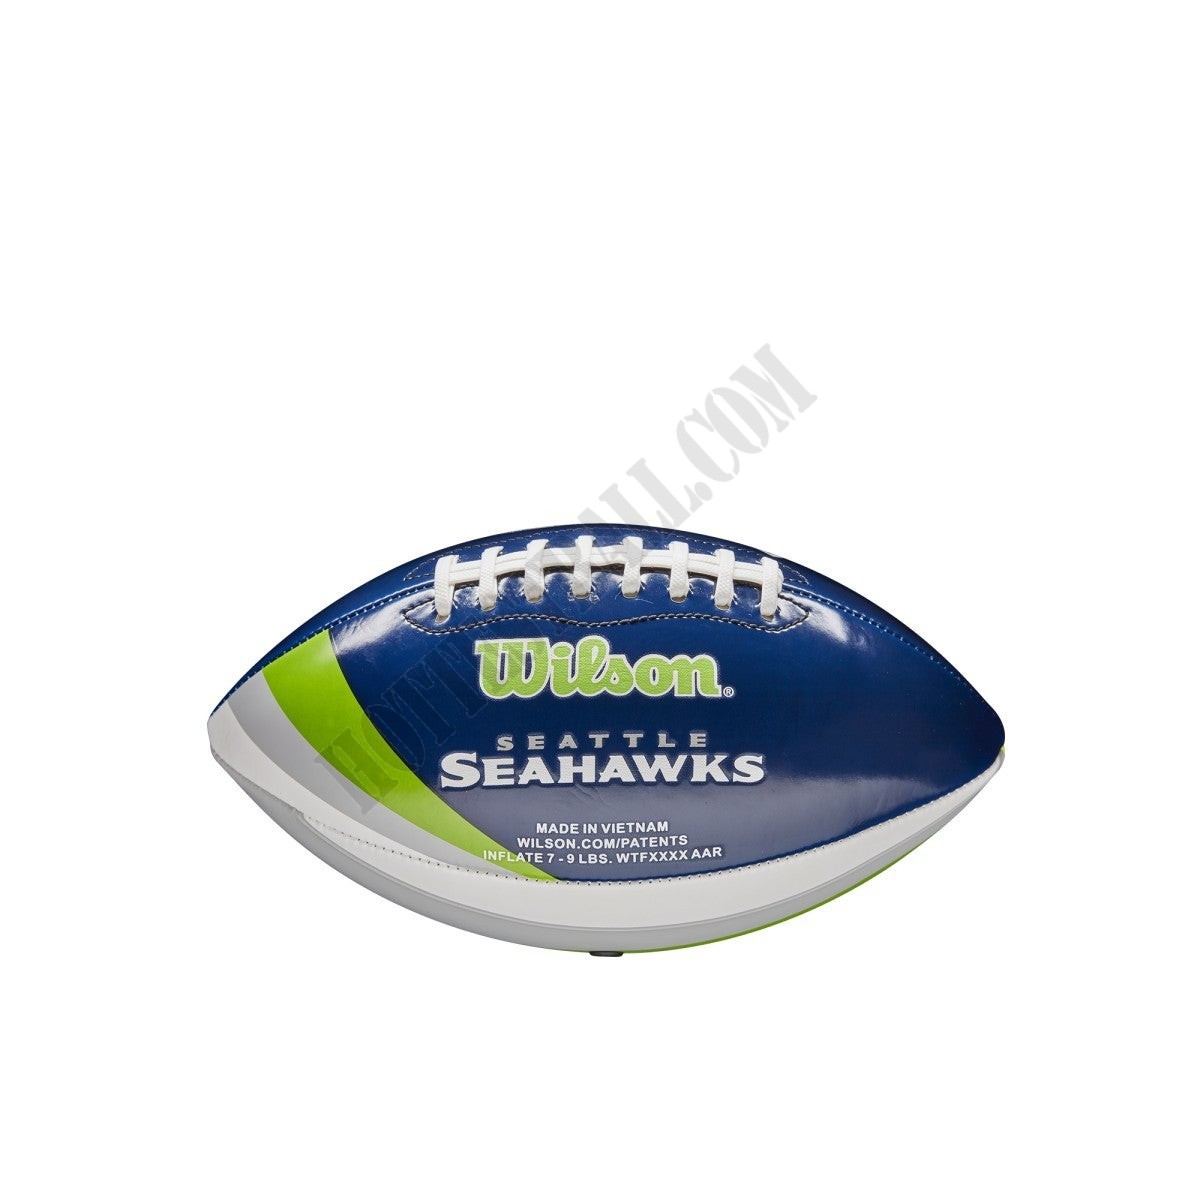 NFL City Pride Football - Seattle Seahawks ● Wilson Promotions - -1